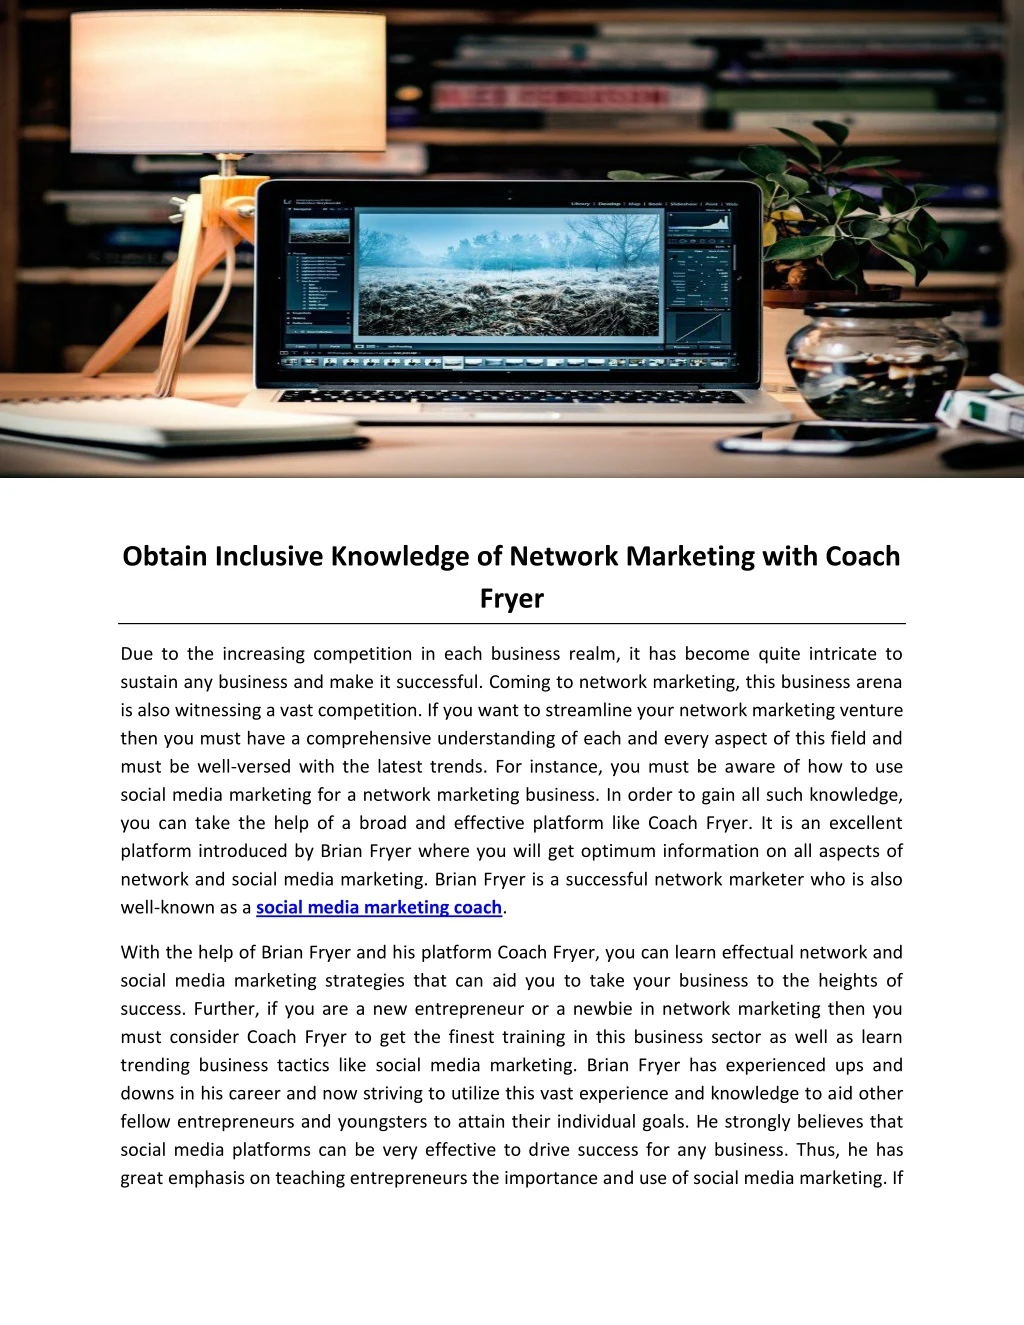 obtain inclusive knowledge of network marketing